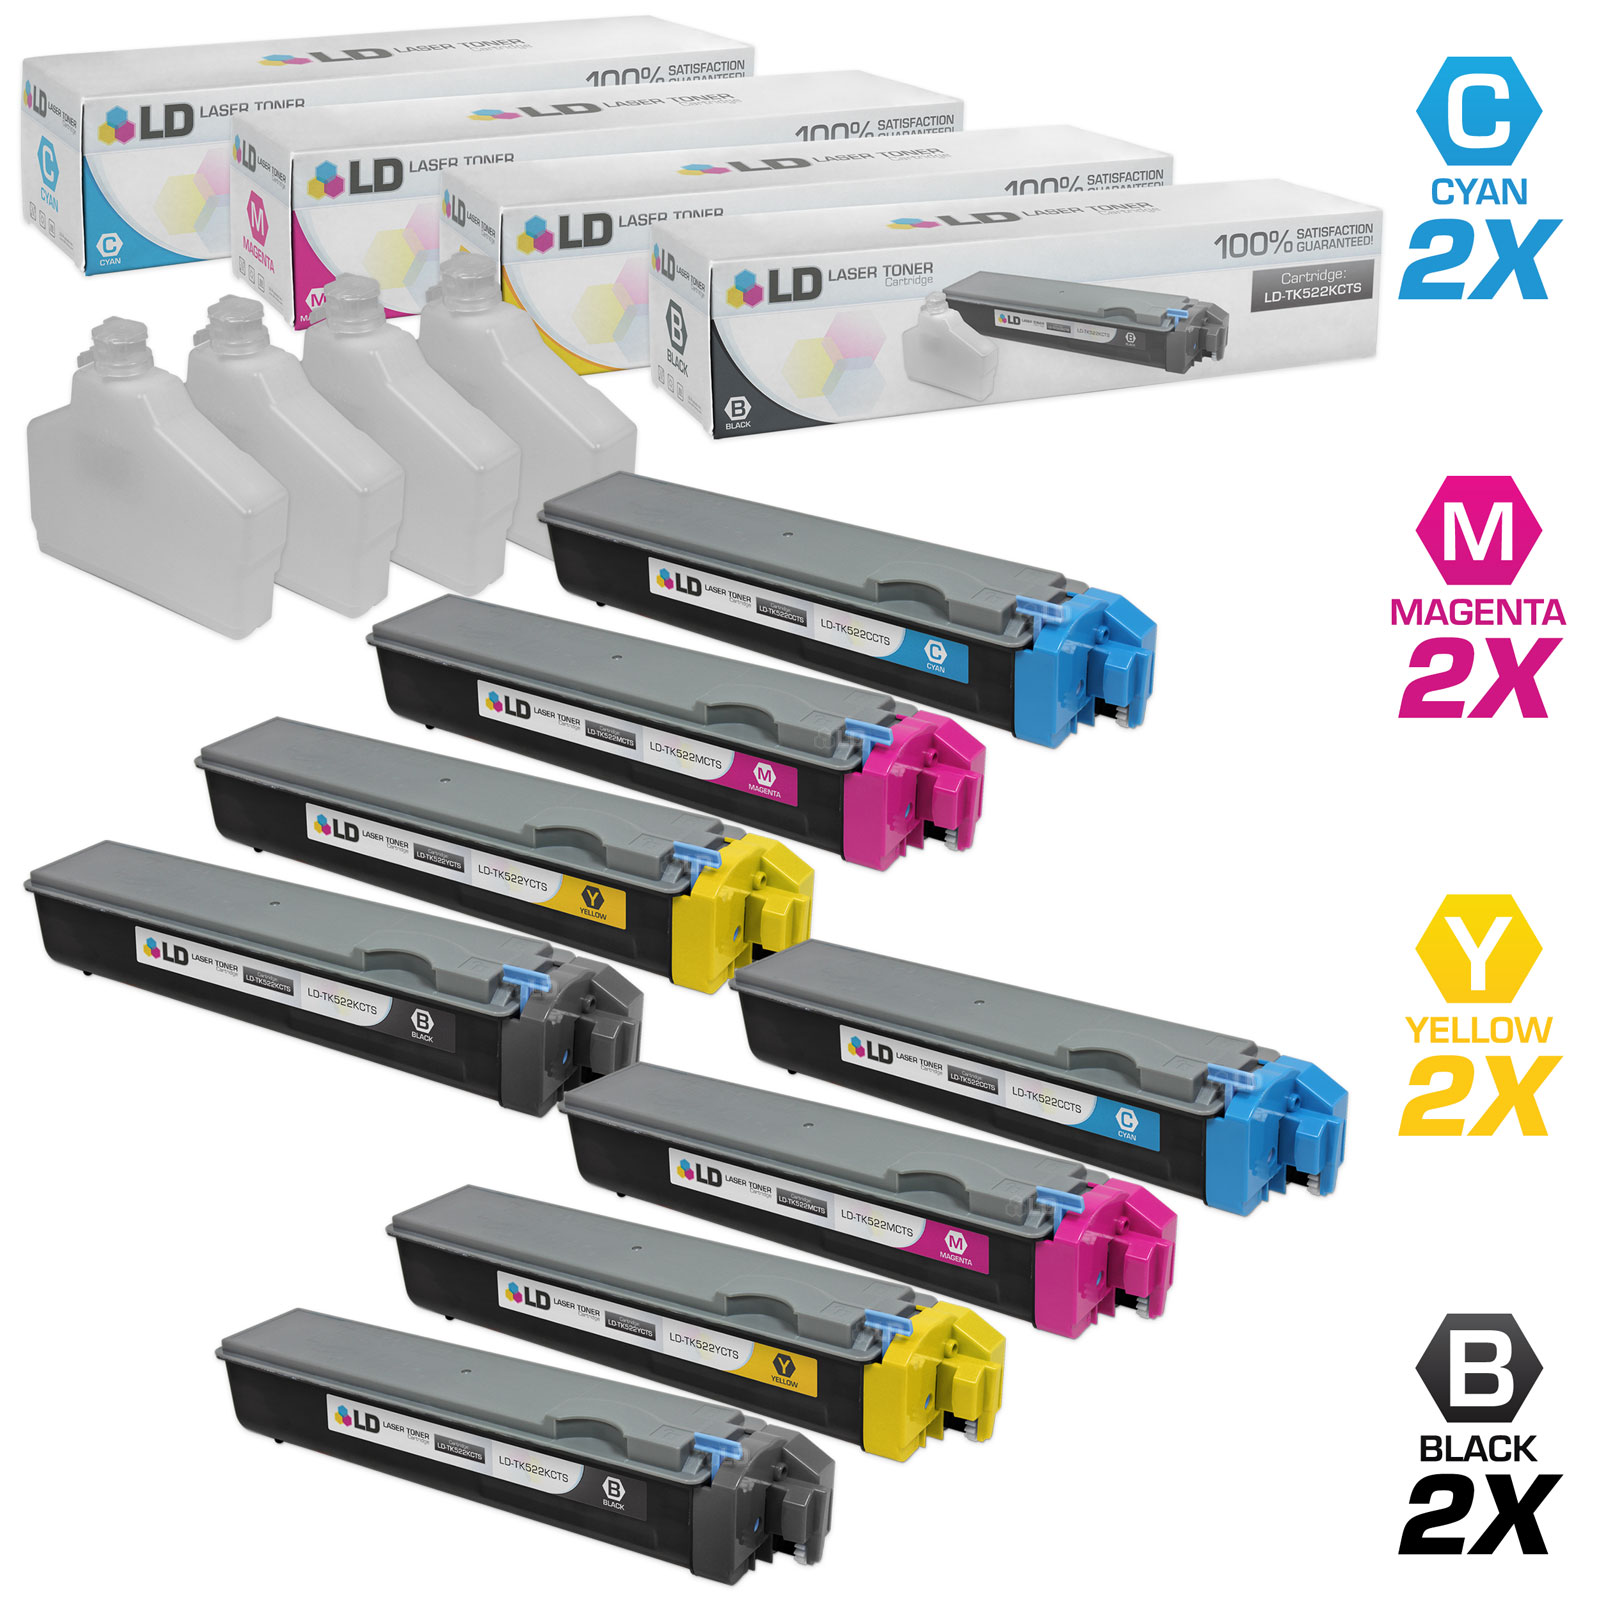 LD Compatible Replacements for Kyocera-Mita 8PK TK-522 Laser Toner Cartridges Includes: 2 TK-522K Black, 2 TK-522C Cyan, 2 TK-522M Magenta, & 2 TK-522Y Yellow for use in Kyocera-Mita FS-C5015N - image 1 of 1